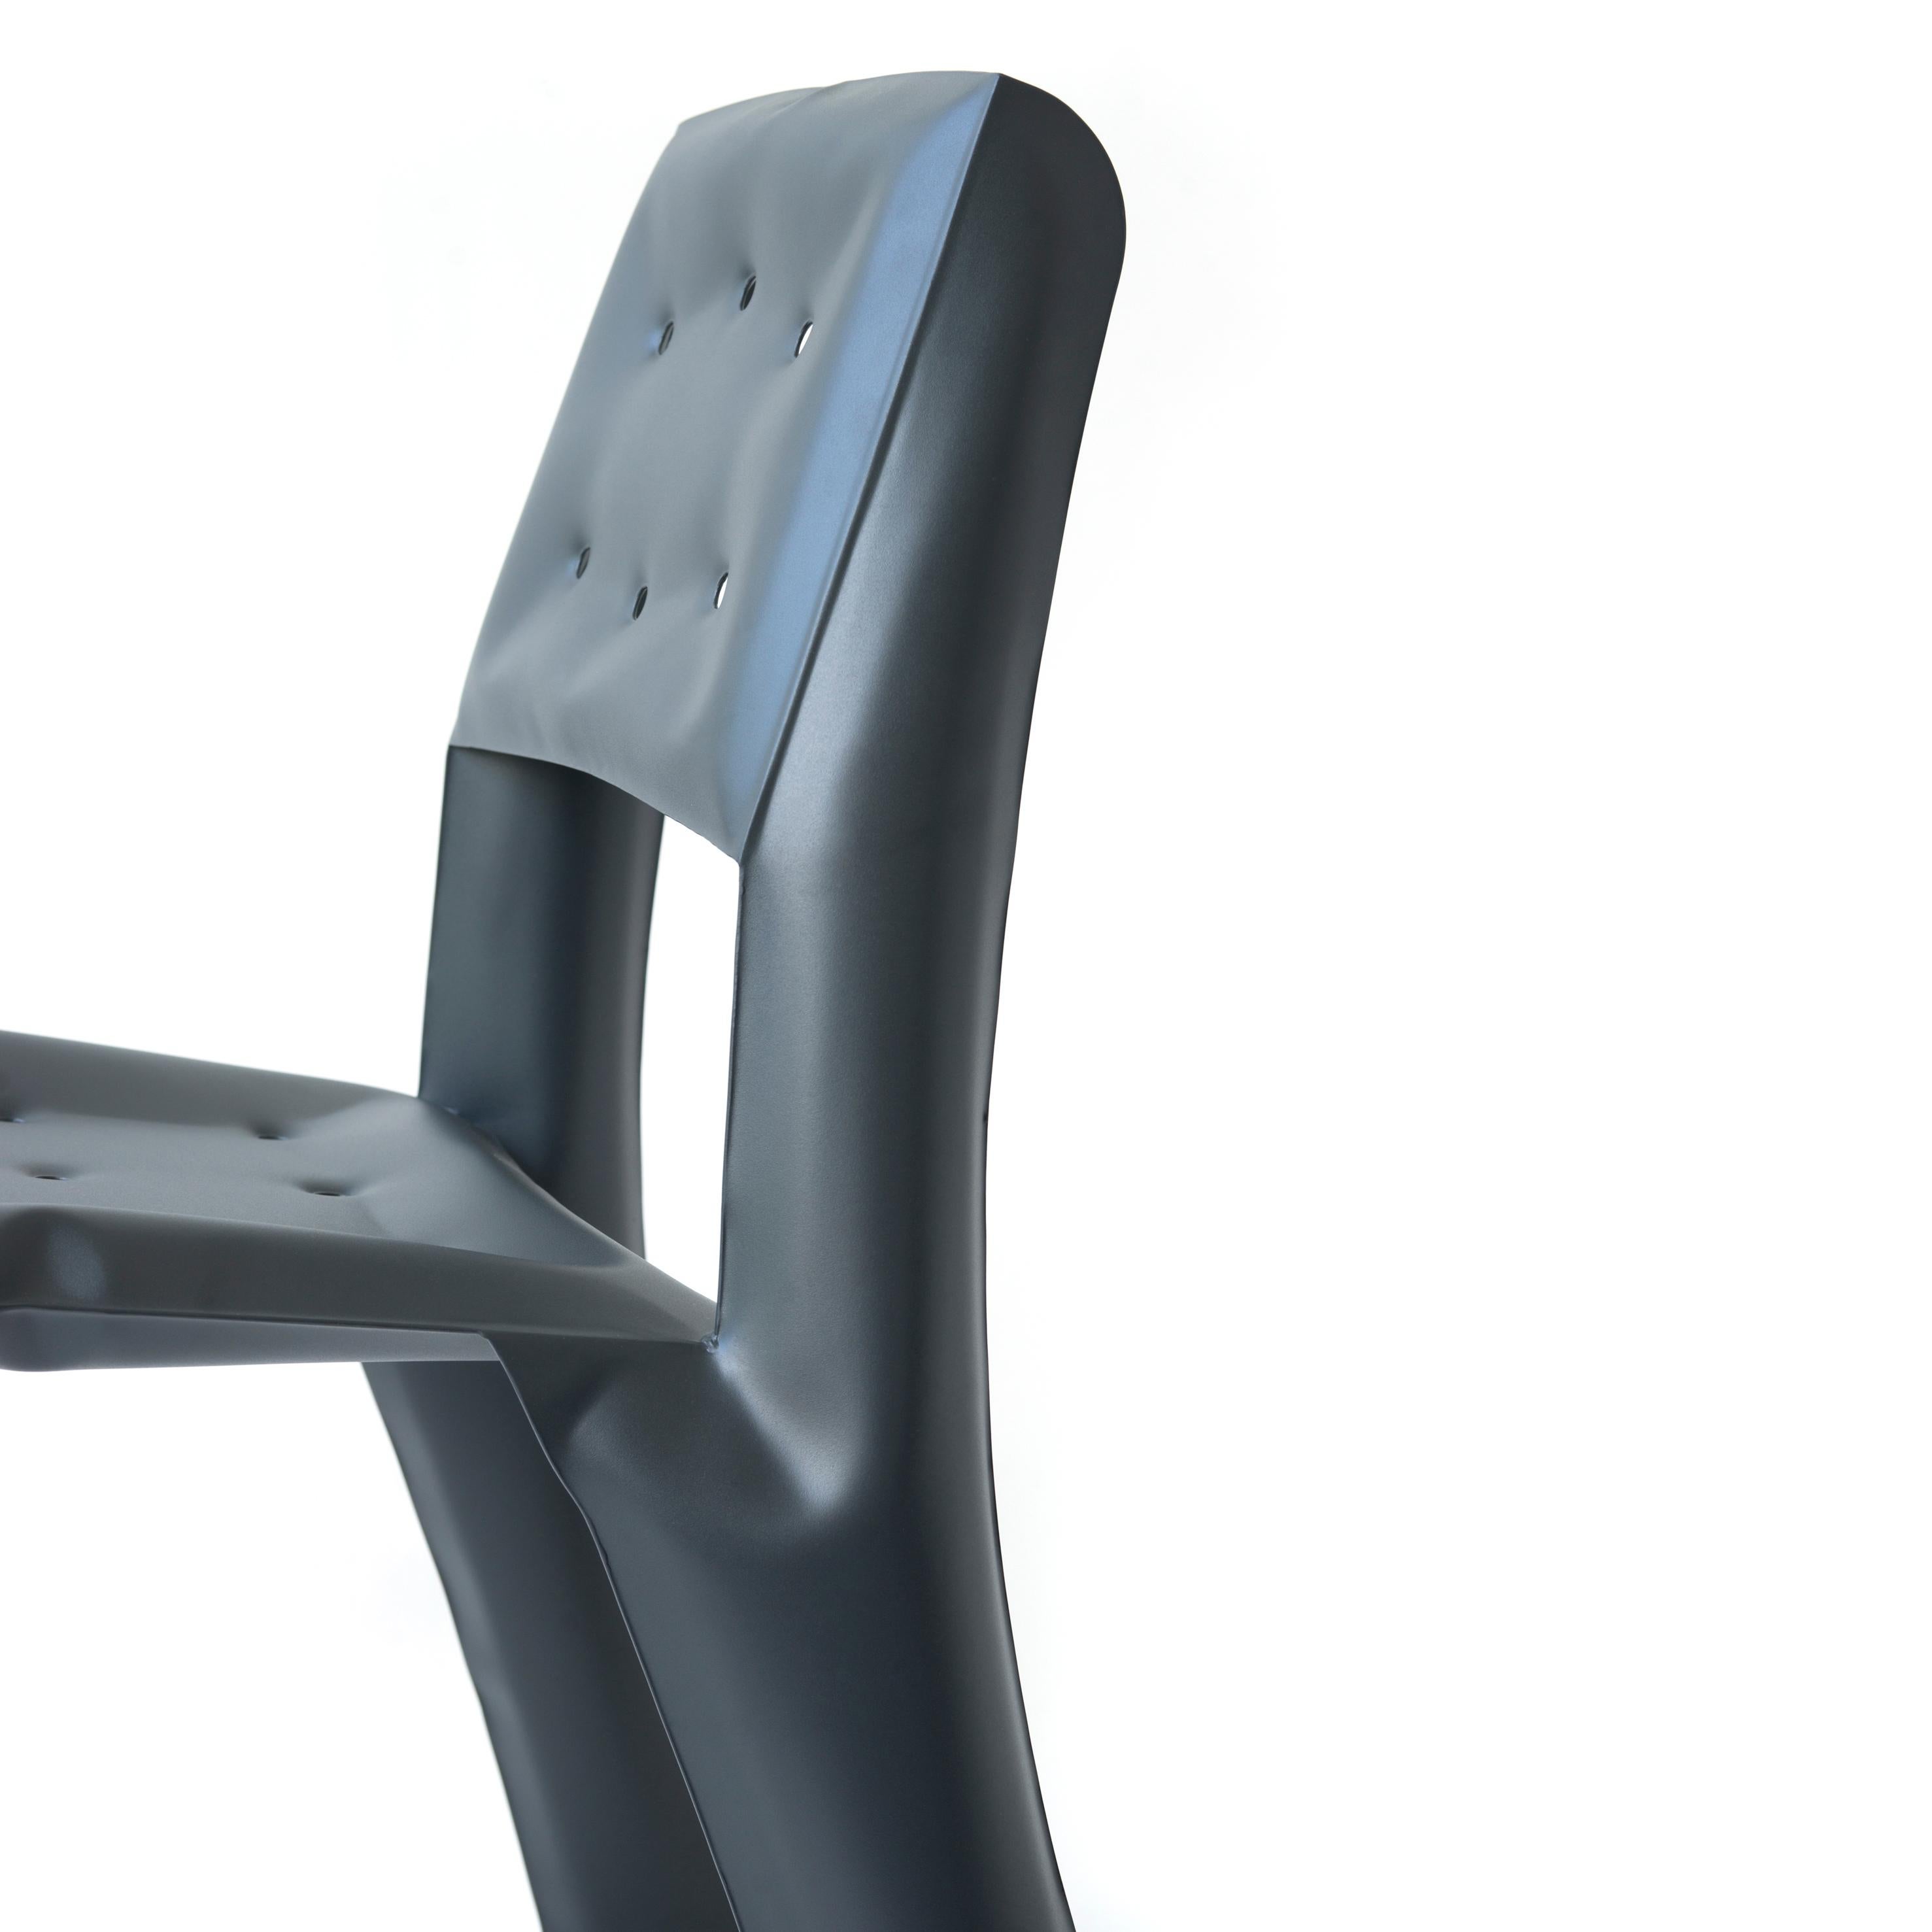 Graphite Aluminum Chippensteel 0.5 Sculptural Chair by Zieta For Sale 1